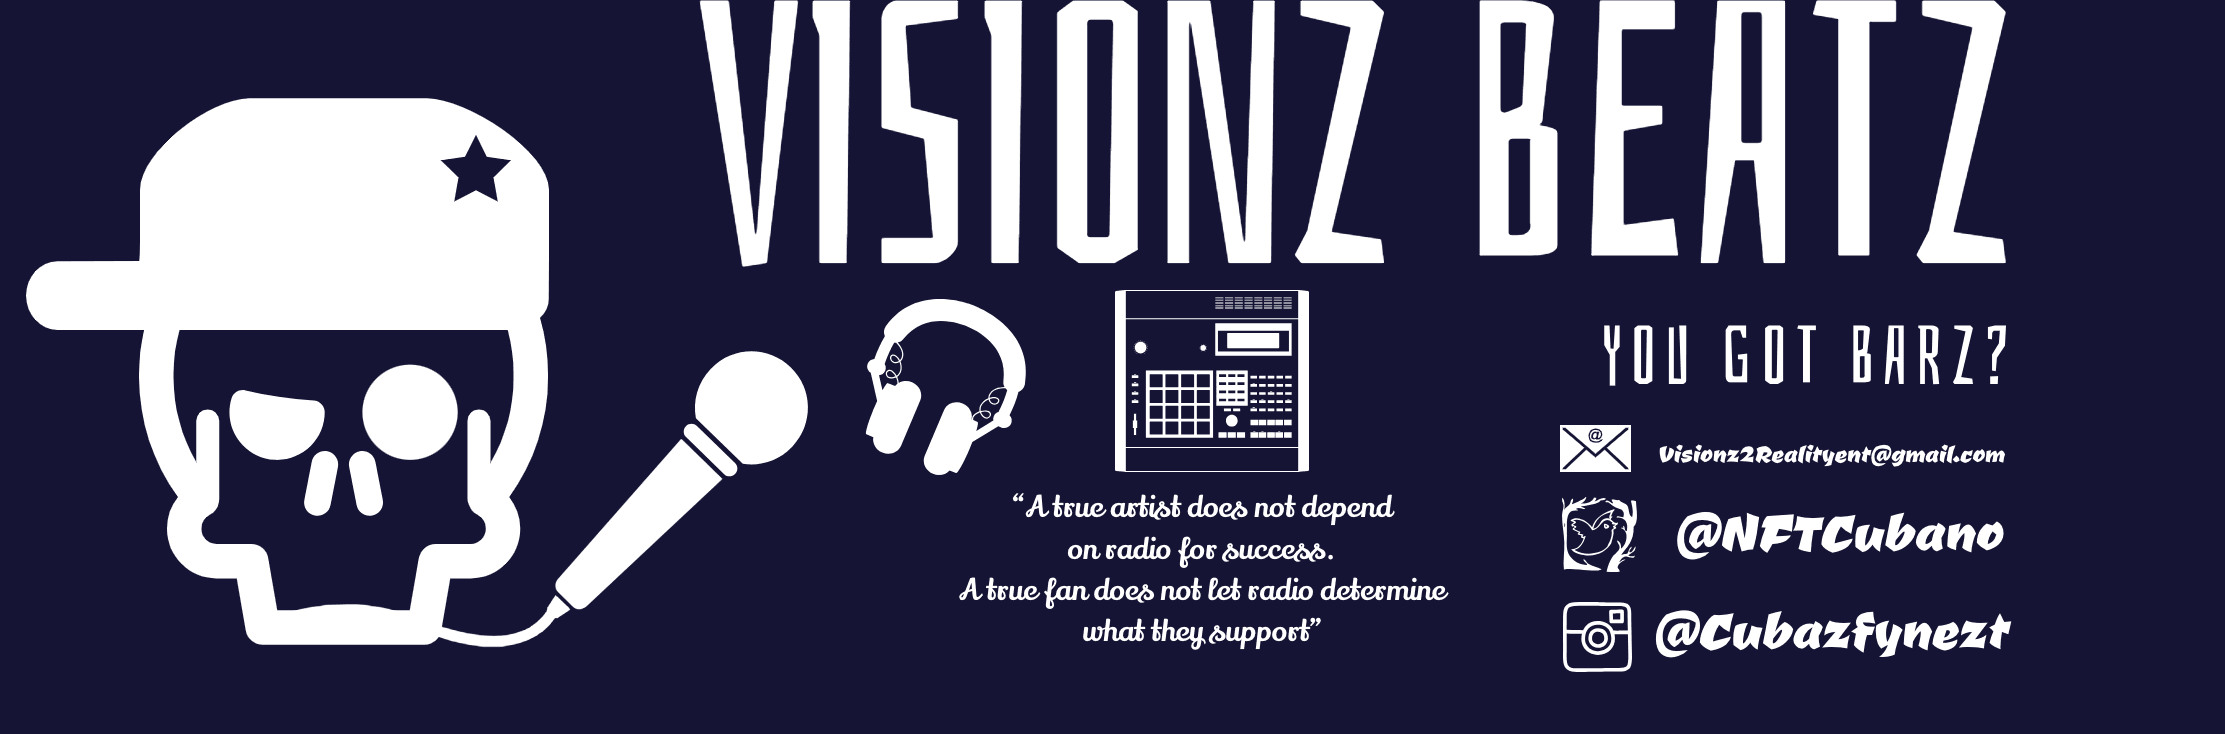 VisionzBeatz banner